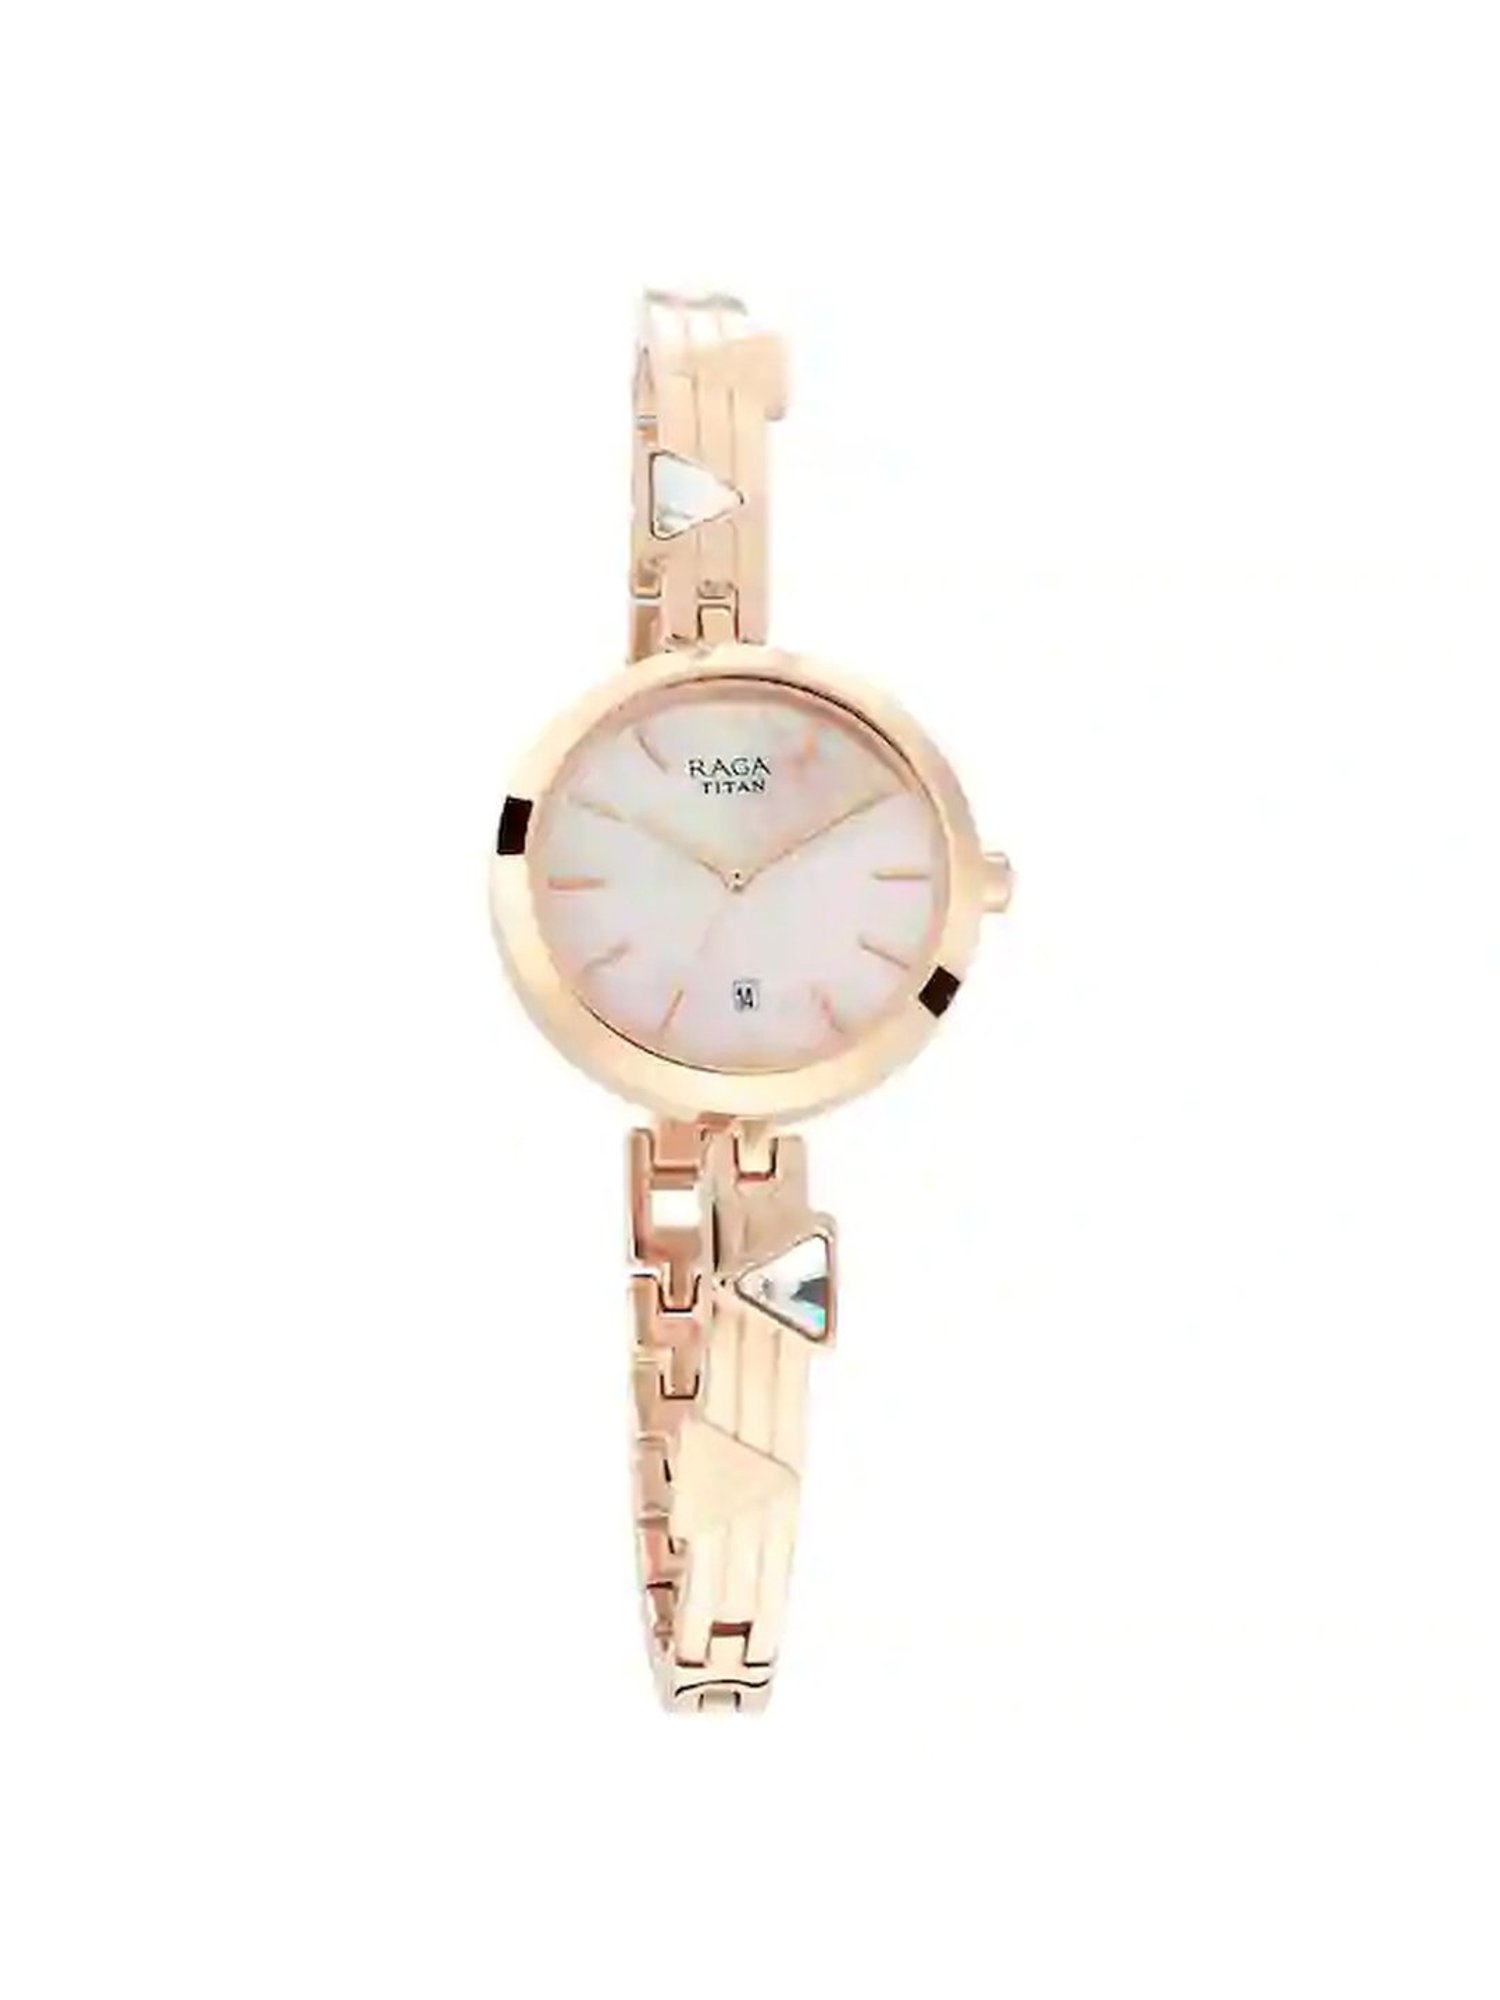 Titan Raga Women's Bracelet Watch | Quartz, Water Resistant | eBay